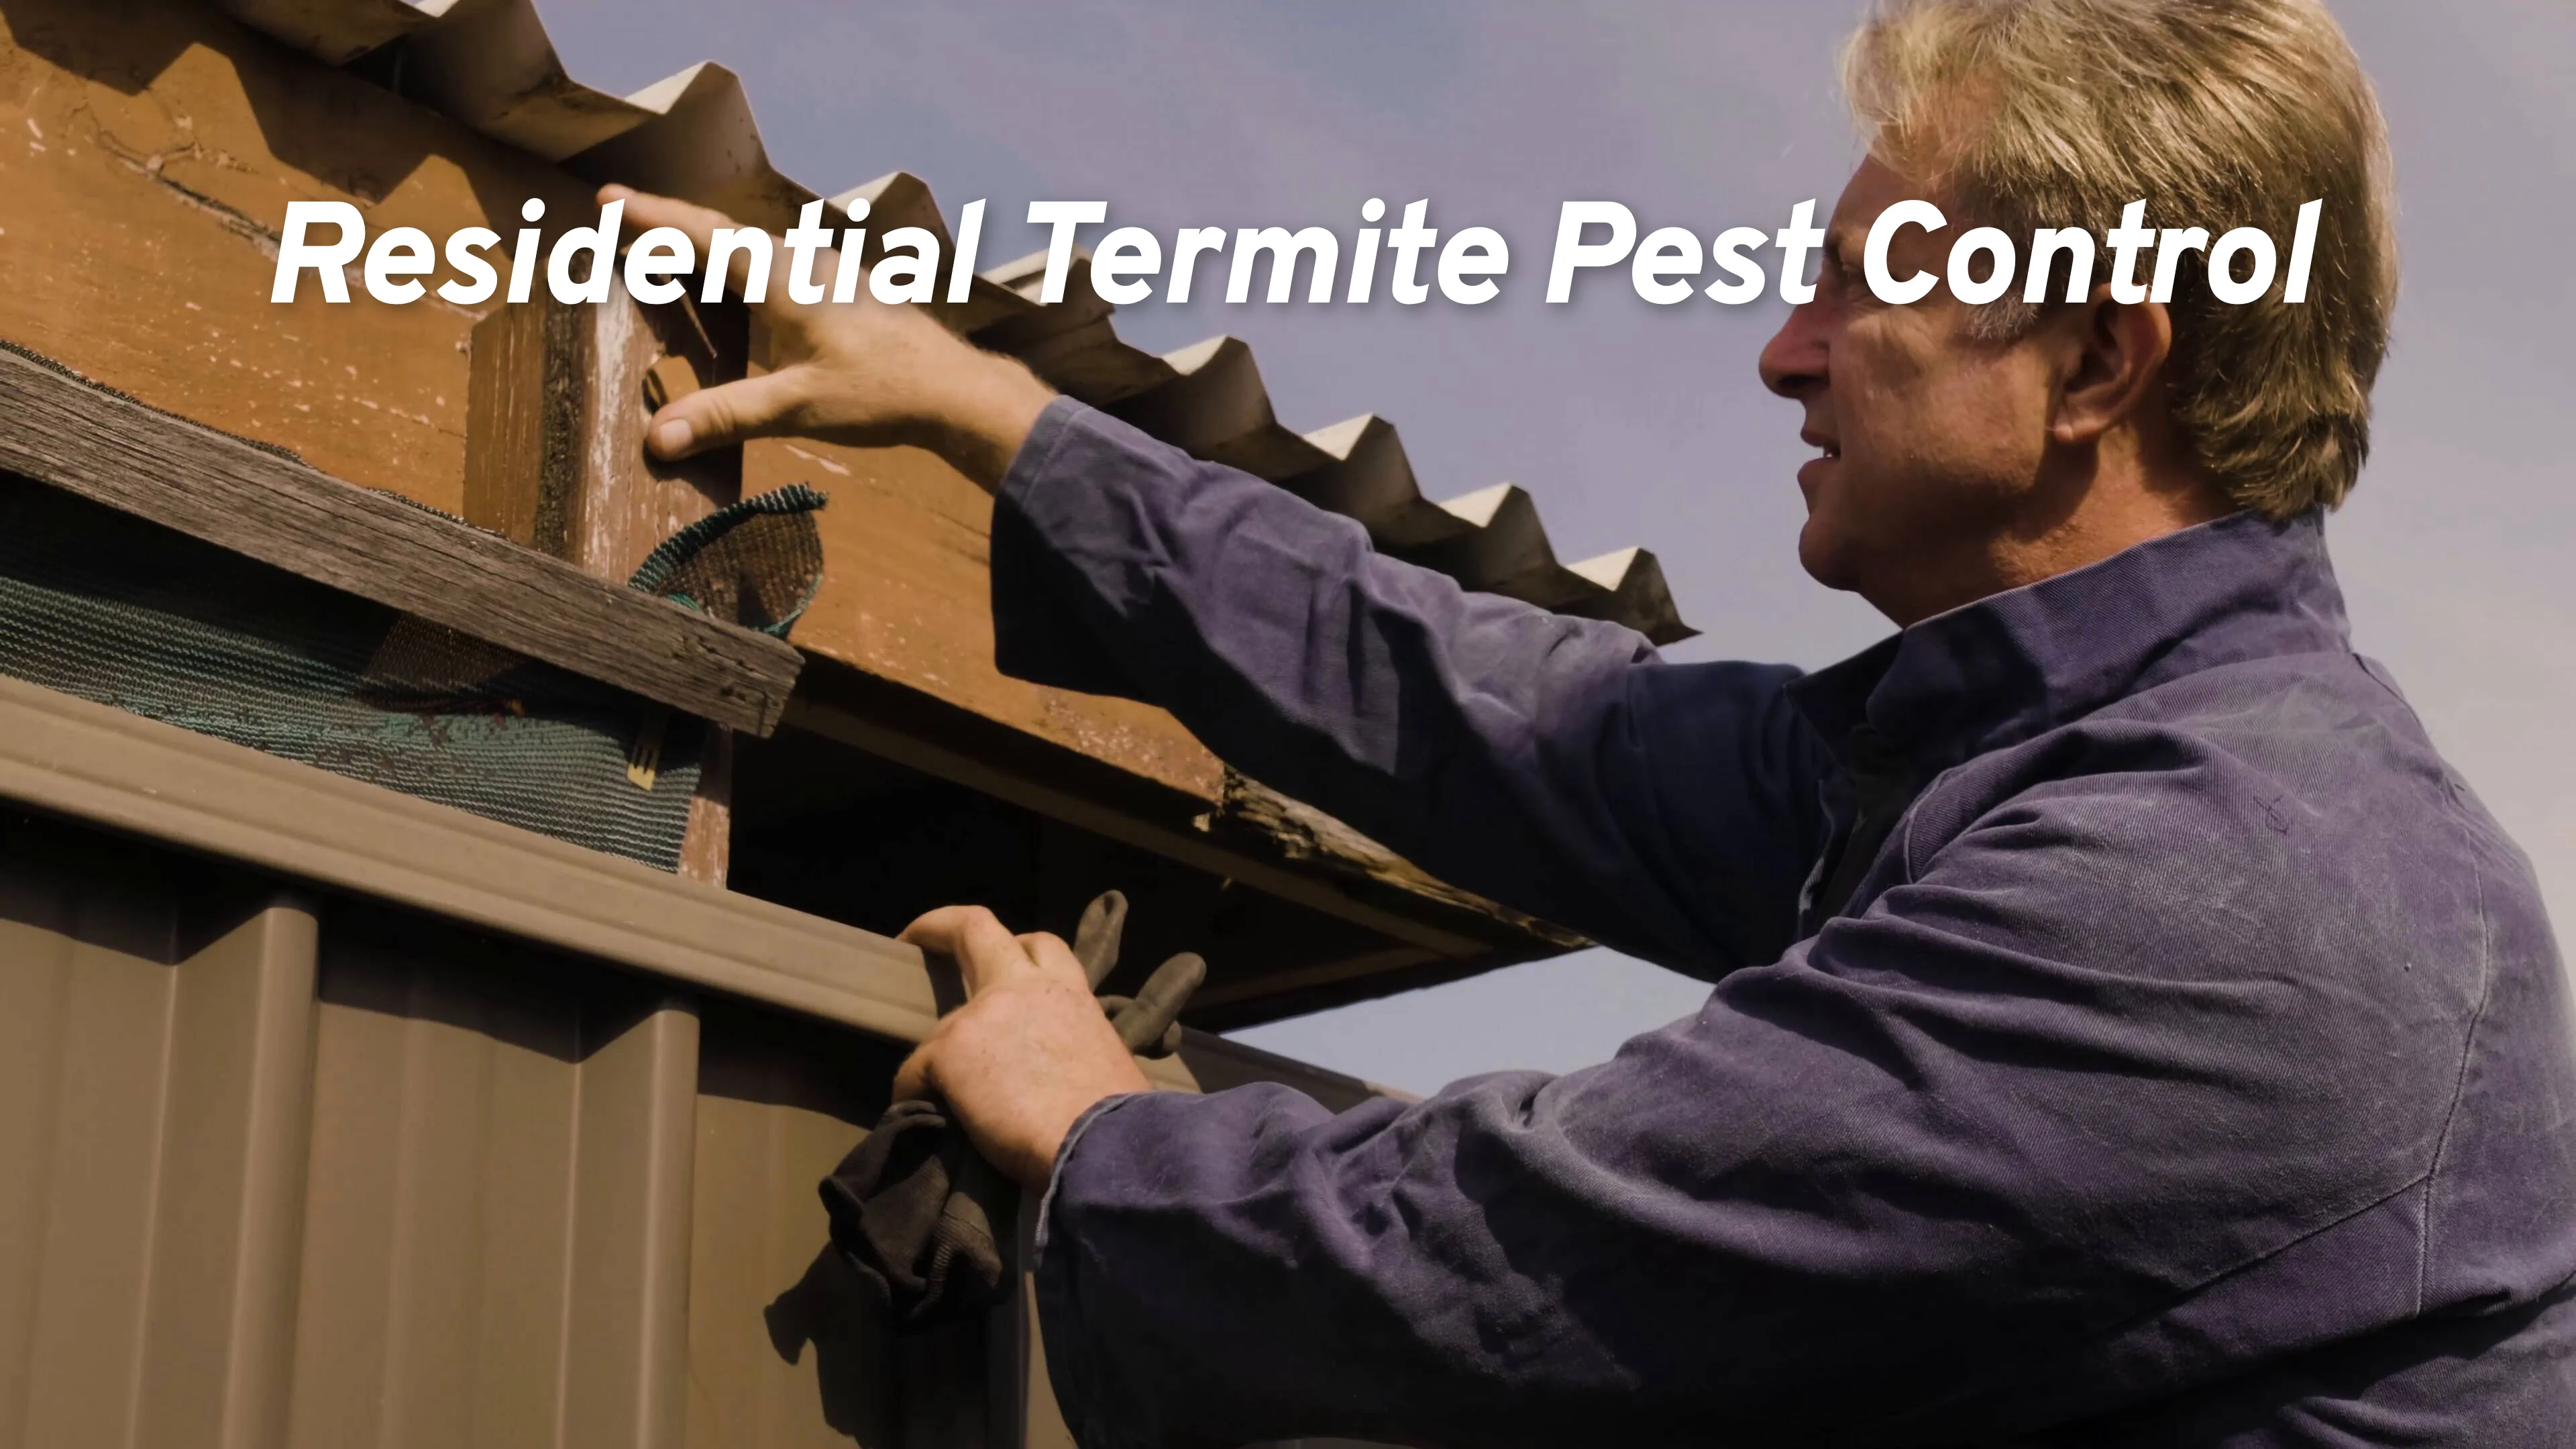 Pest Control Sydney - Syd Termite & Pest Control Services Sydney Wide